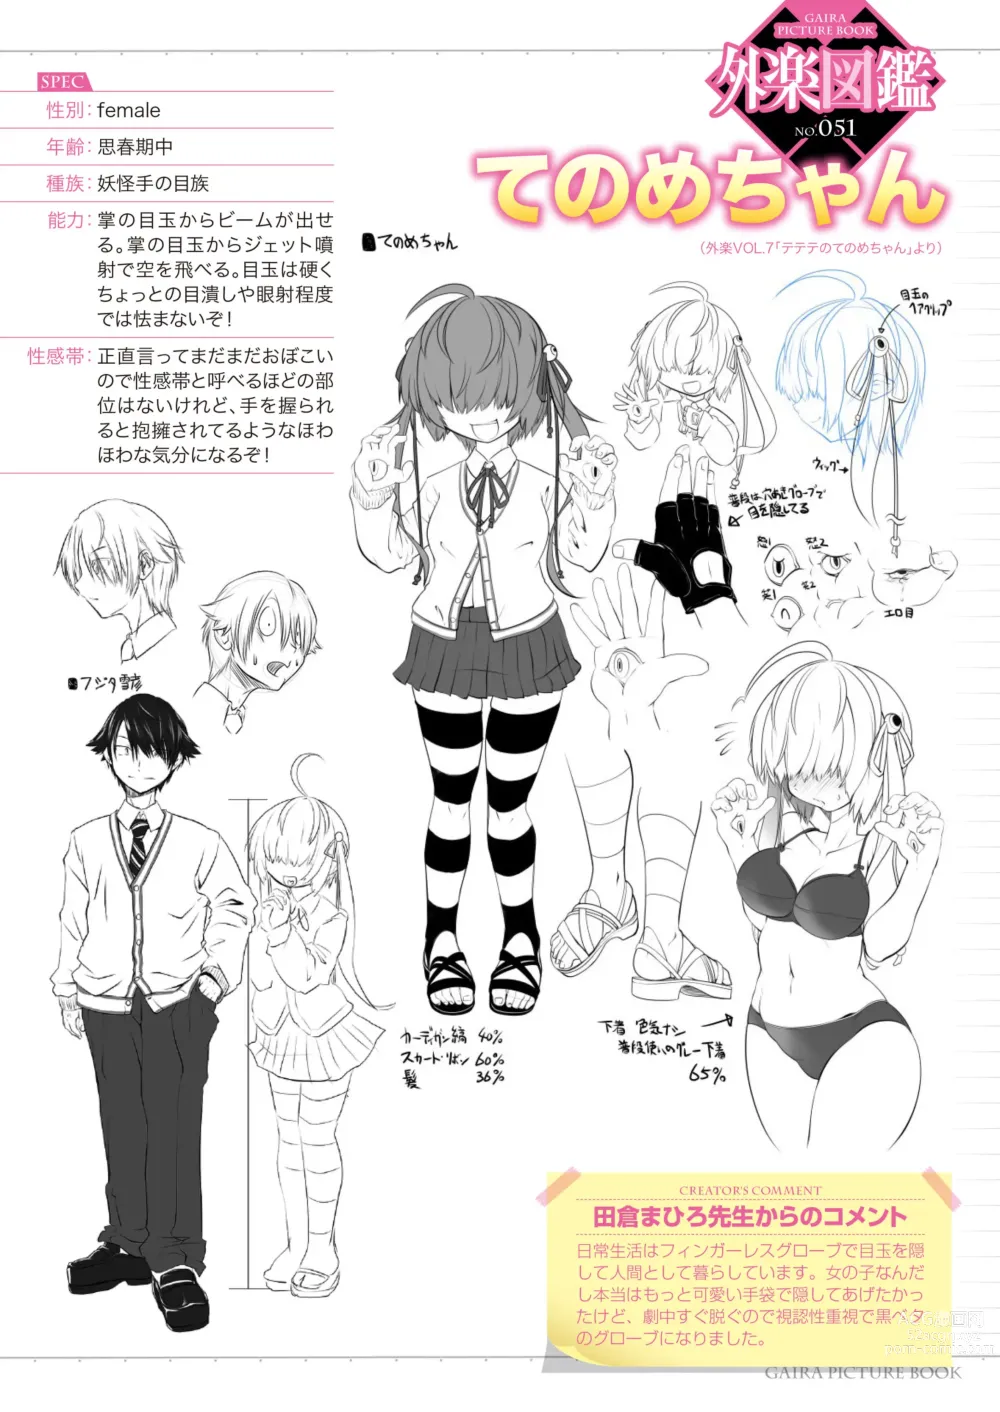 Page 6 of manga Gaira Zukan Vol. 07